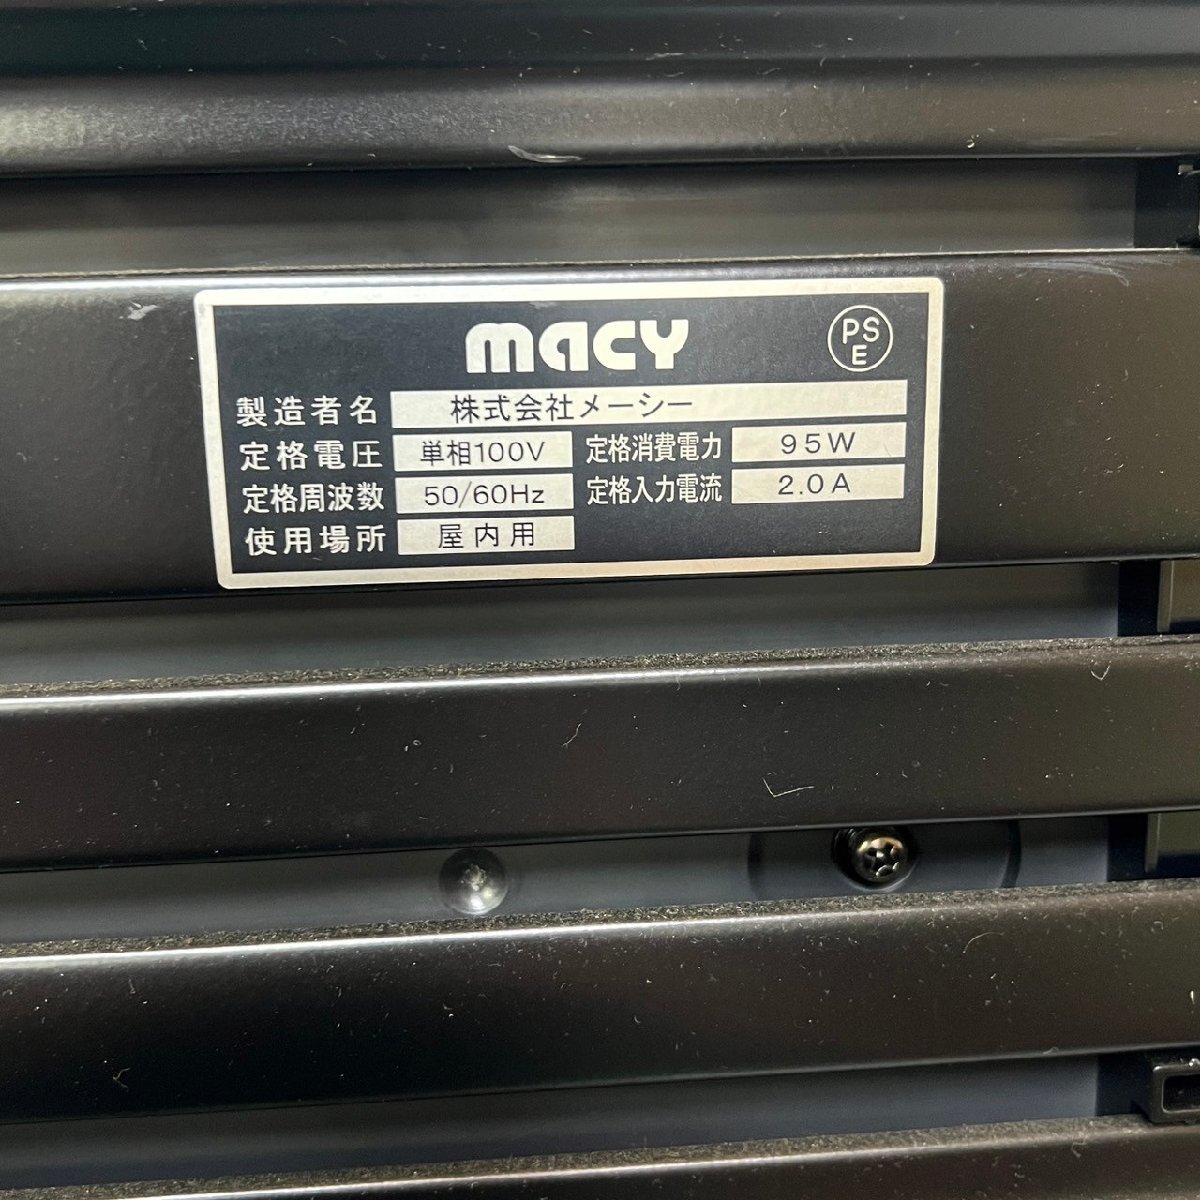  slot machine slot apparatus [ magic young lady ...* Magi ka2]me-si- coin un- necessary home use power supply operation verification settled .. Magi /C4185